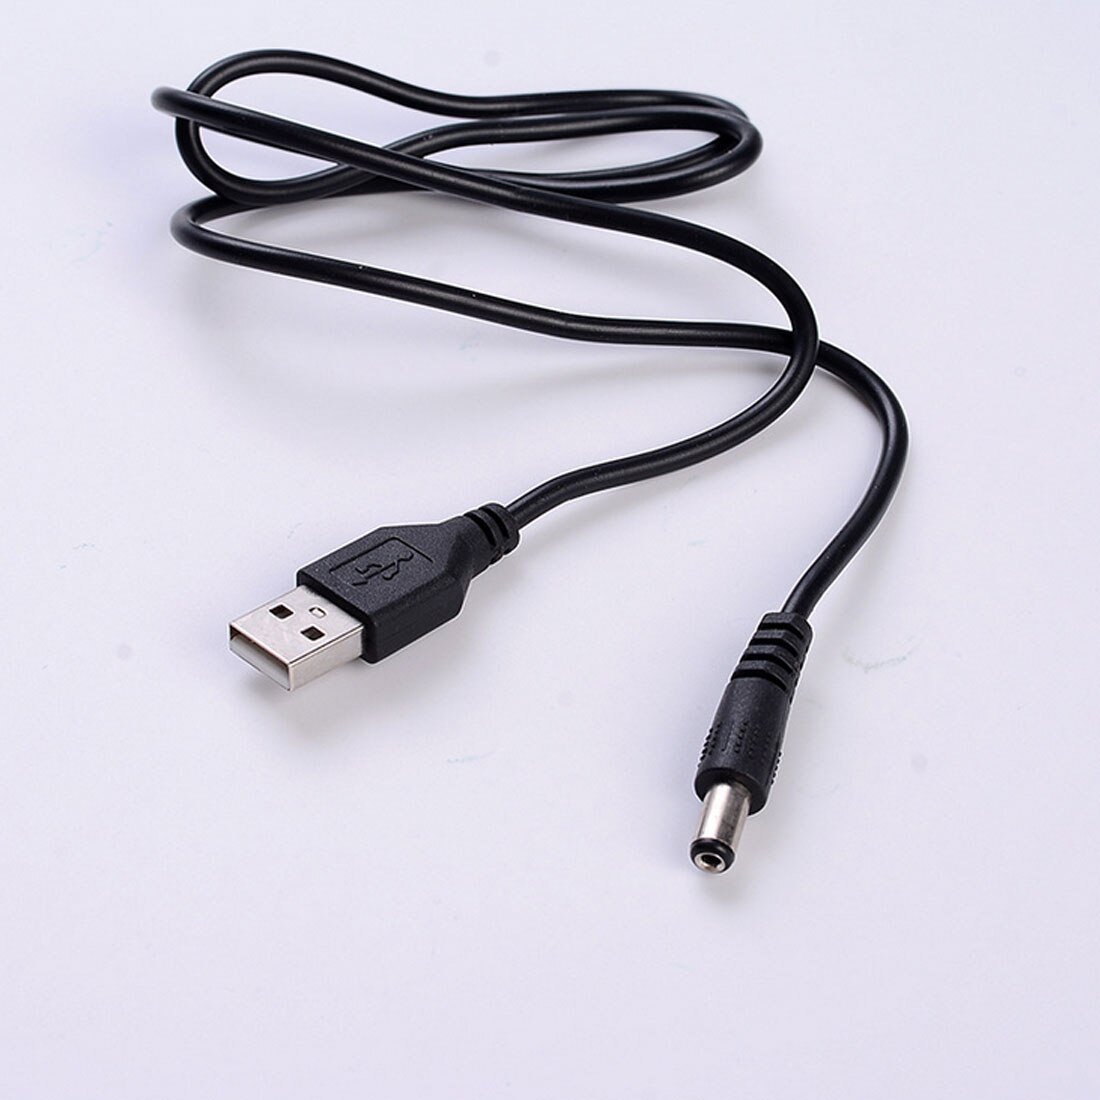 Centechia Goede USB 5 v Charger power Cable DC 5.5mm plug/jack USB Power Kabel Voor MP3 /MP4 Speler